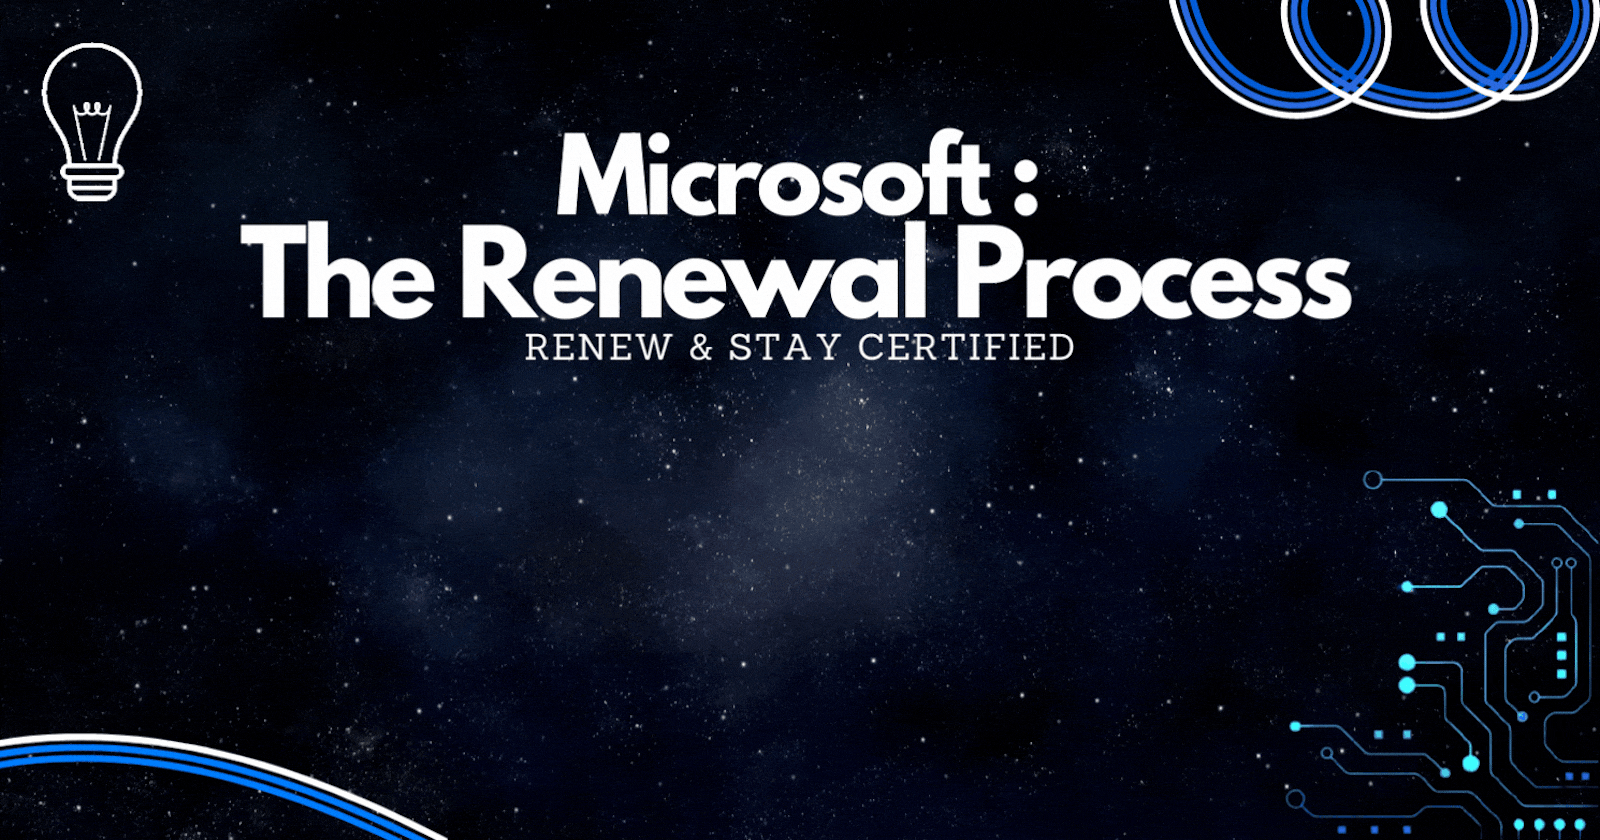 Microsoft Certified: The Renewal Process